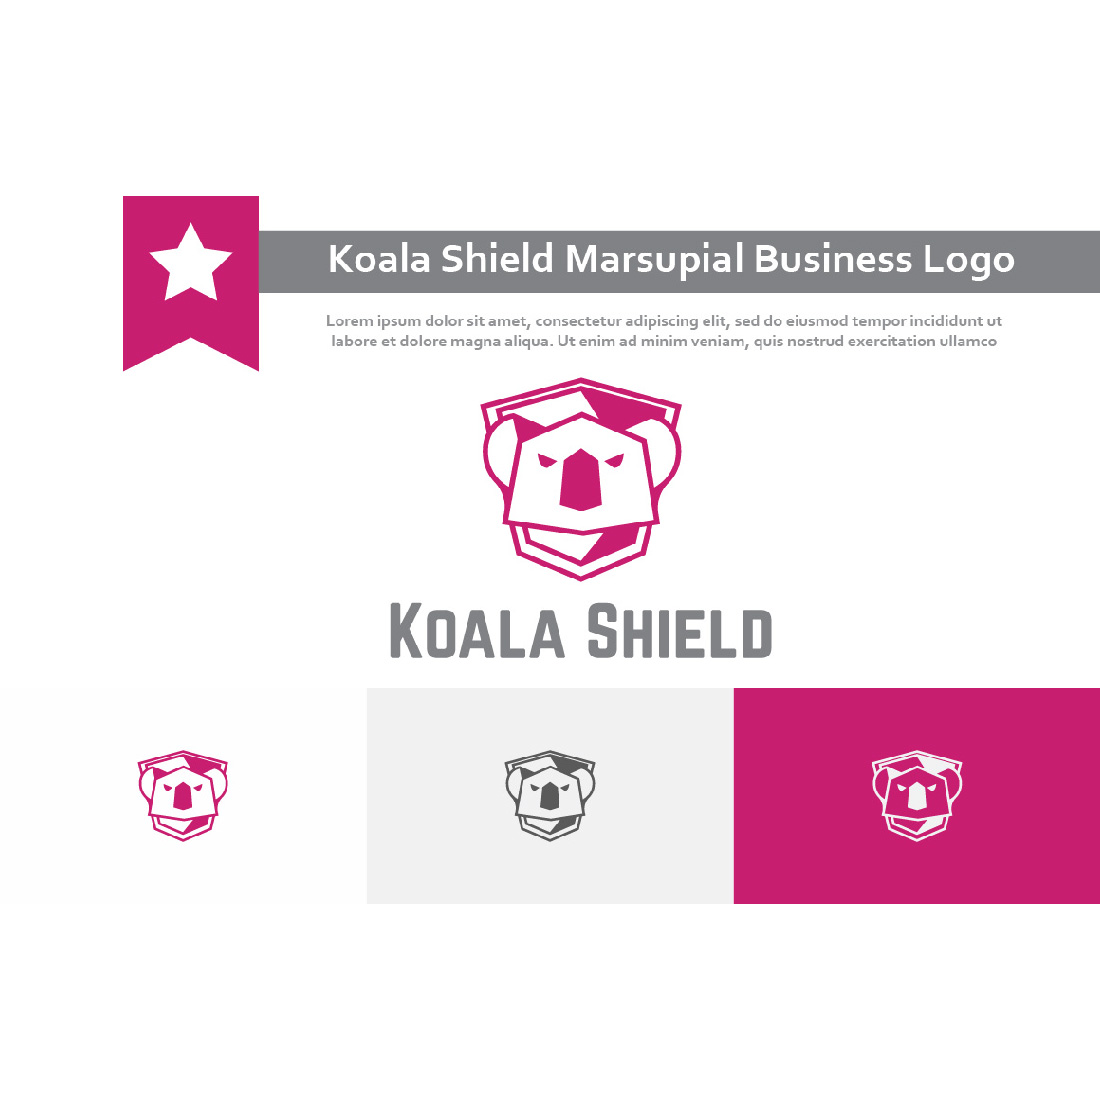 Koala Shield Marsupial Animal Game Business Nature Protection Logo.